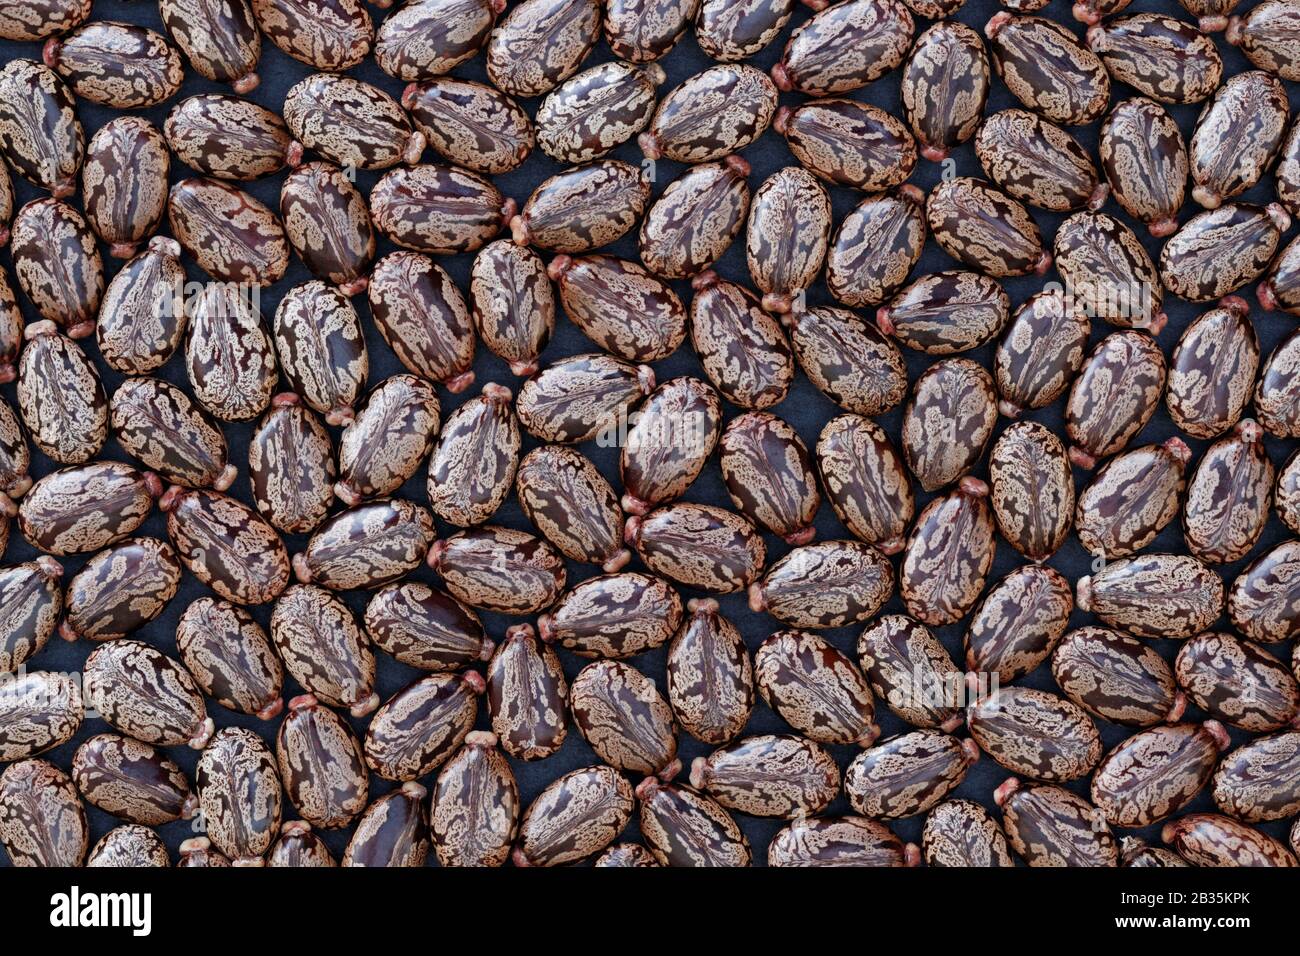 Seeds of Castor Bean (Ricinus communis) - Background: accumulation of castor bean's seeds (ricinus communis) on dark background Stock Photo